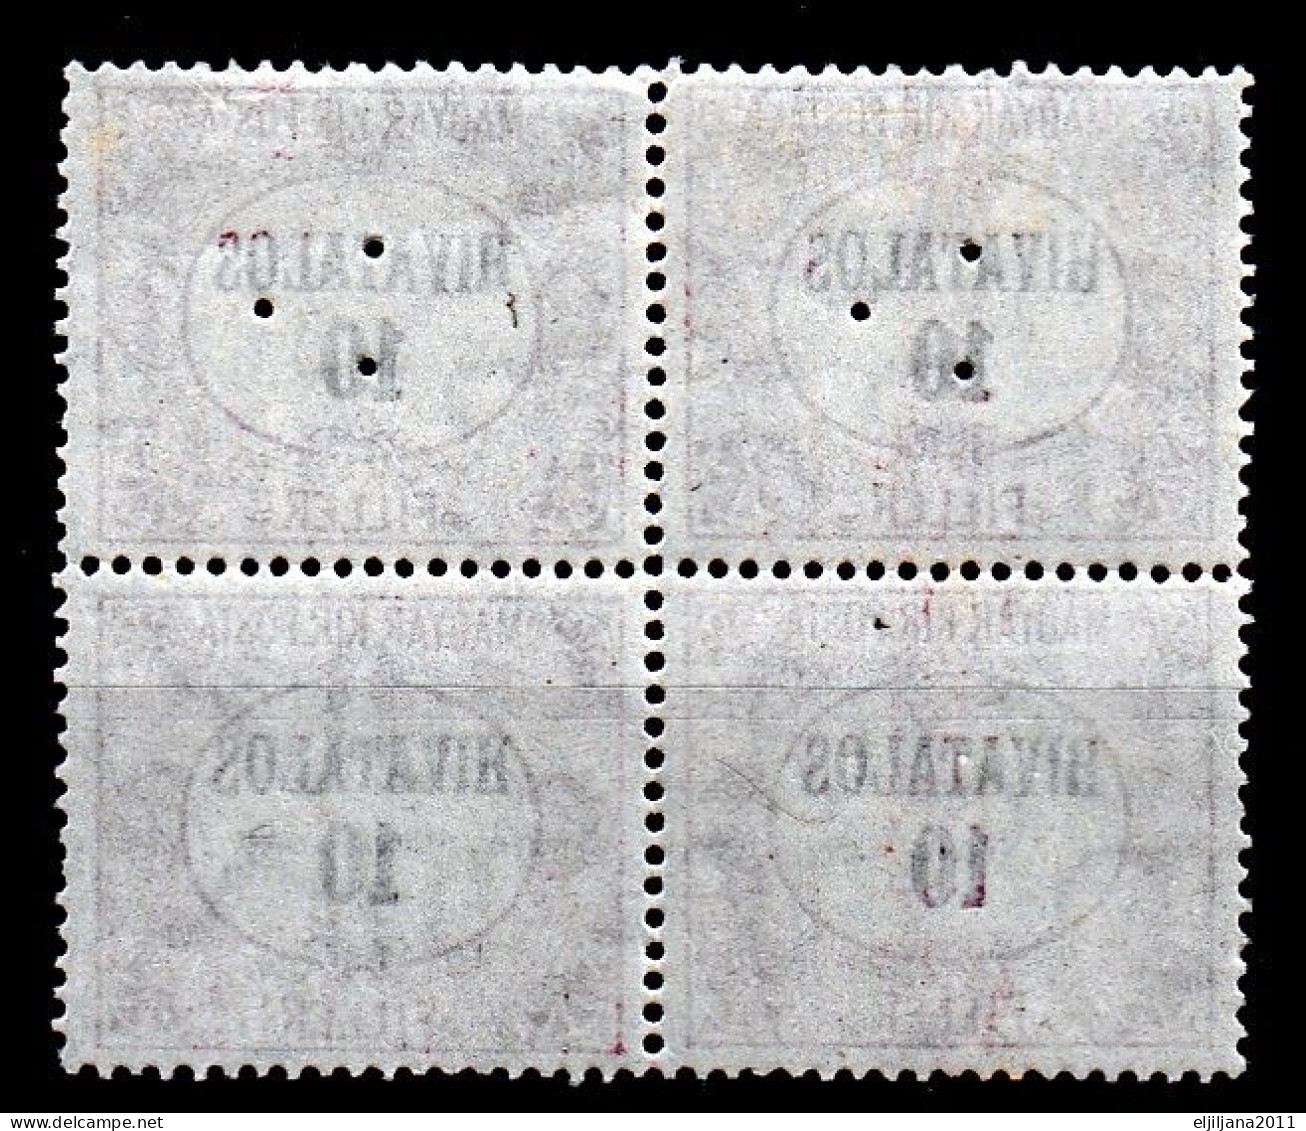 ⁕ Hungary 1921 Ungarn ⁕ Official / Dienstmarke Mi.1 ⁕ MNH Block Of 4 ( 2v Perfin 3 Points, 1v Error ) - Scan - Dienstzegels